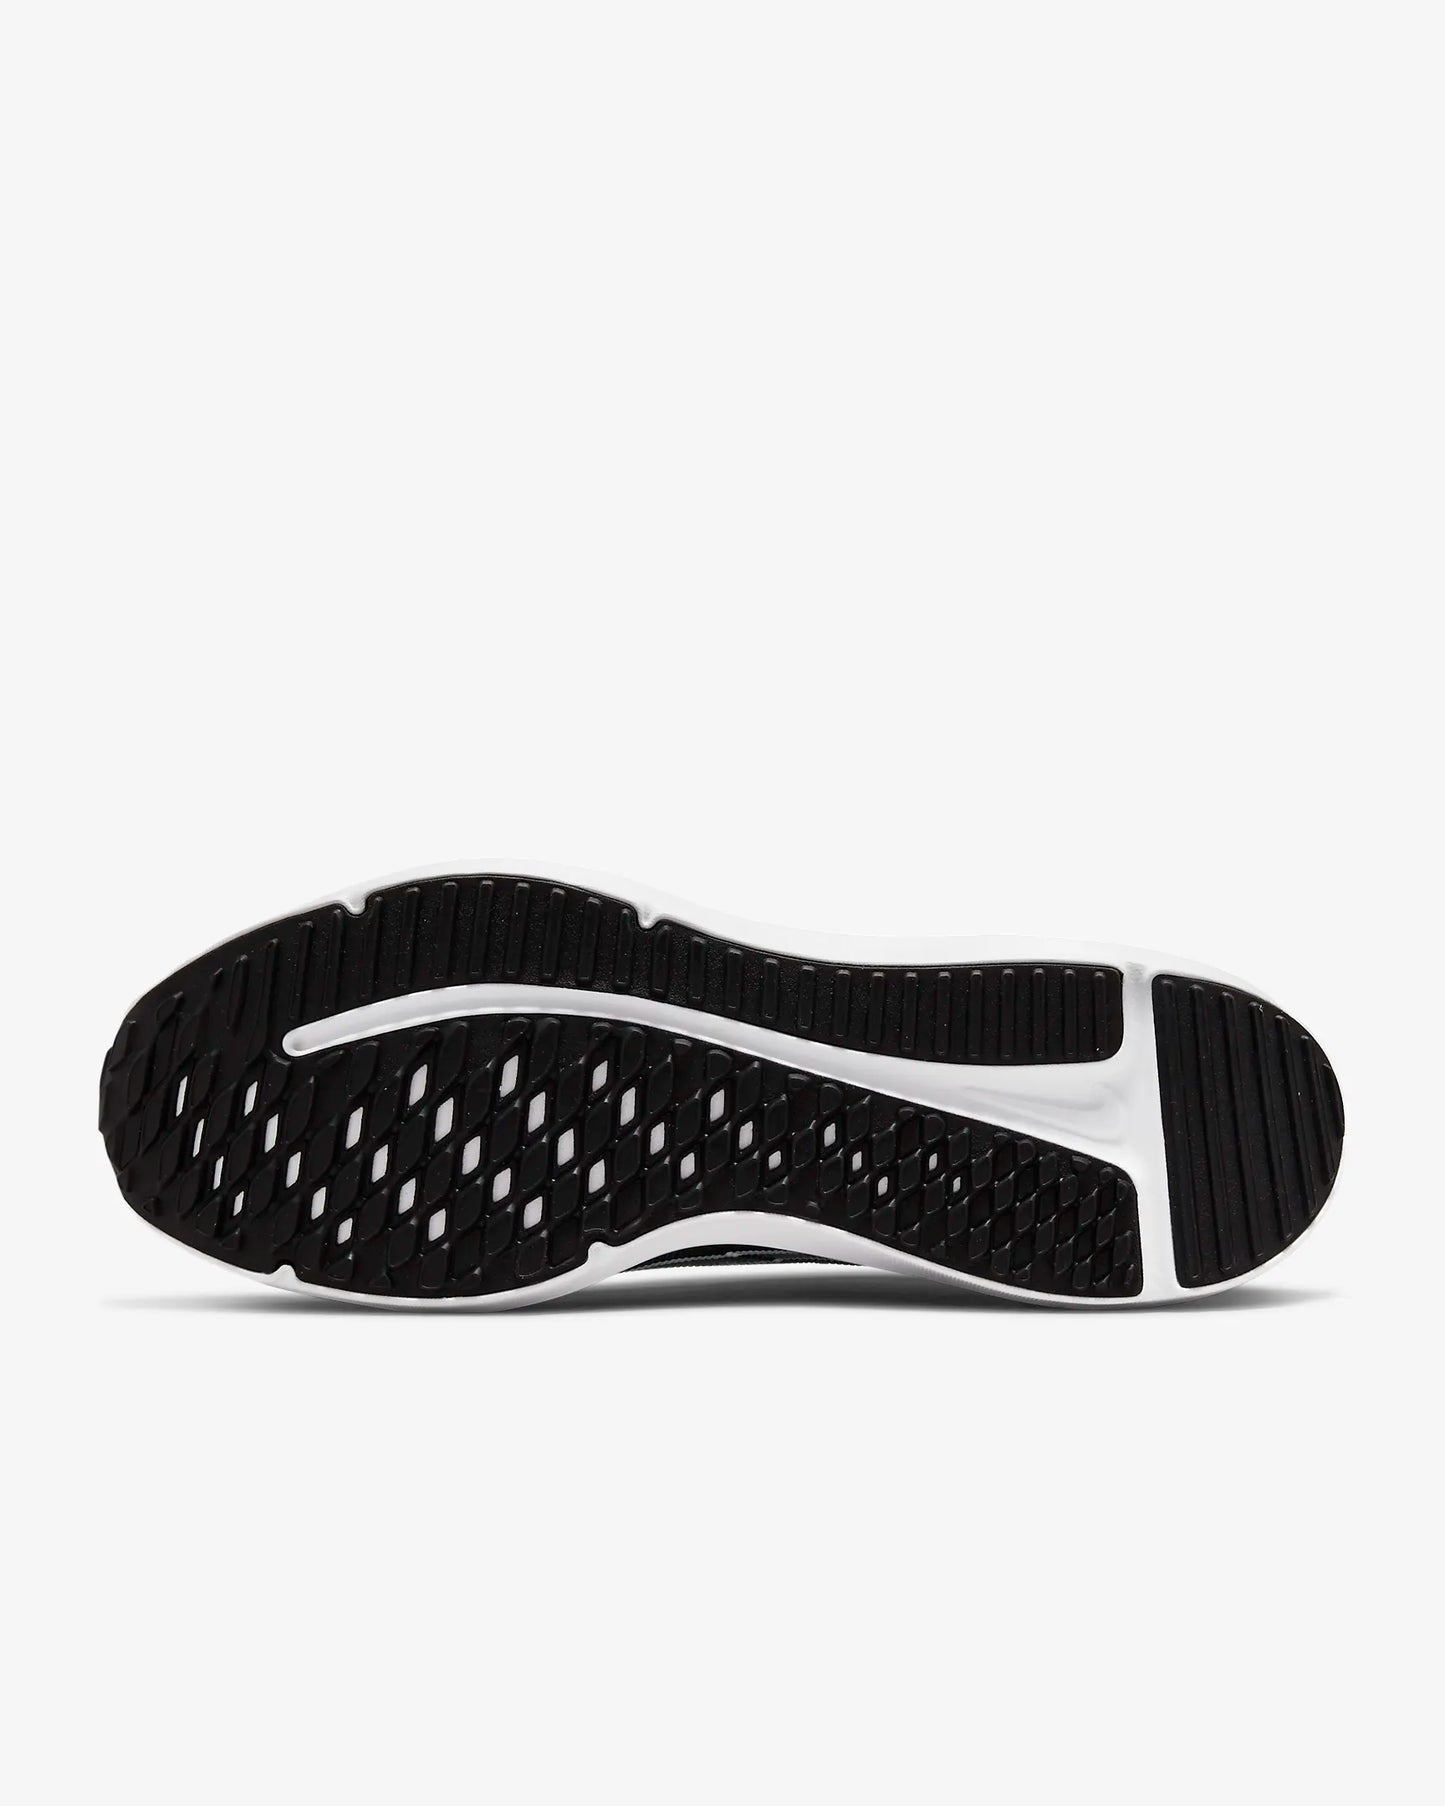 Nike Men's Downshifter 12 Road Running Shoes, Black/Dark Smoke Grey/Pure Platinum/White